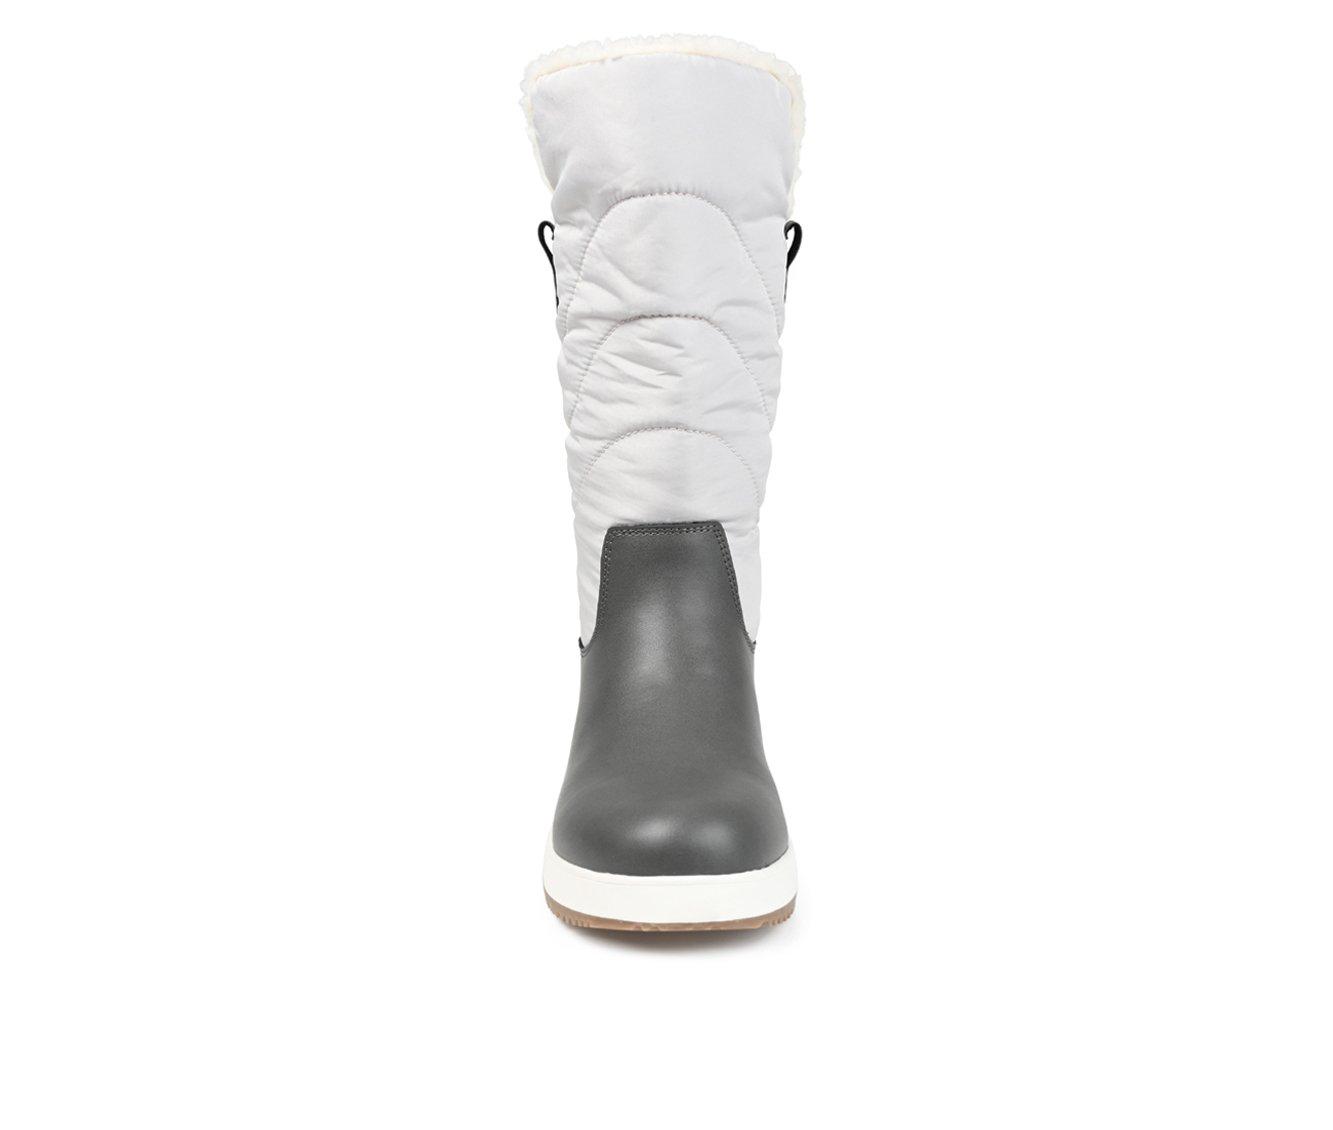 Women's Journee Collection Pippah Winter Boots